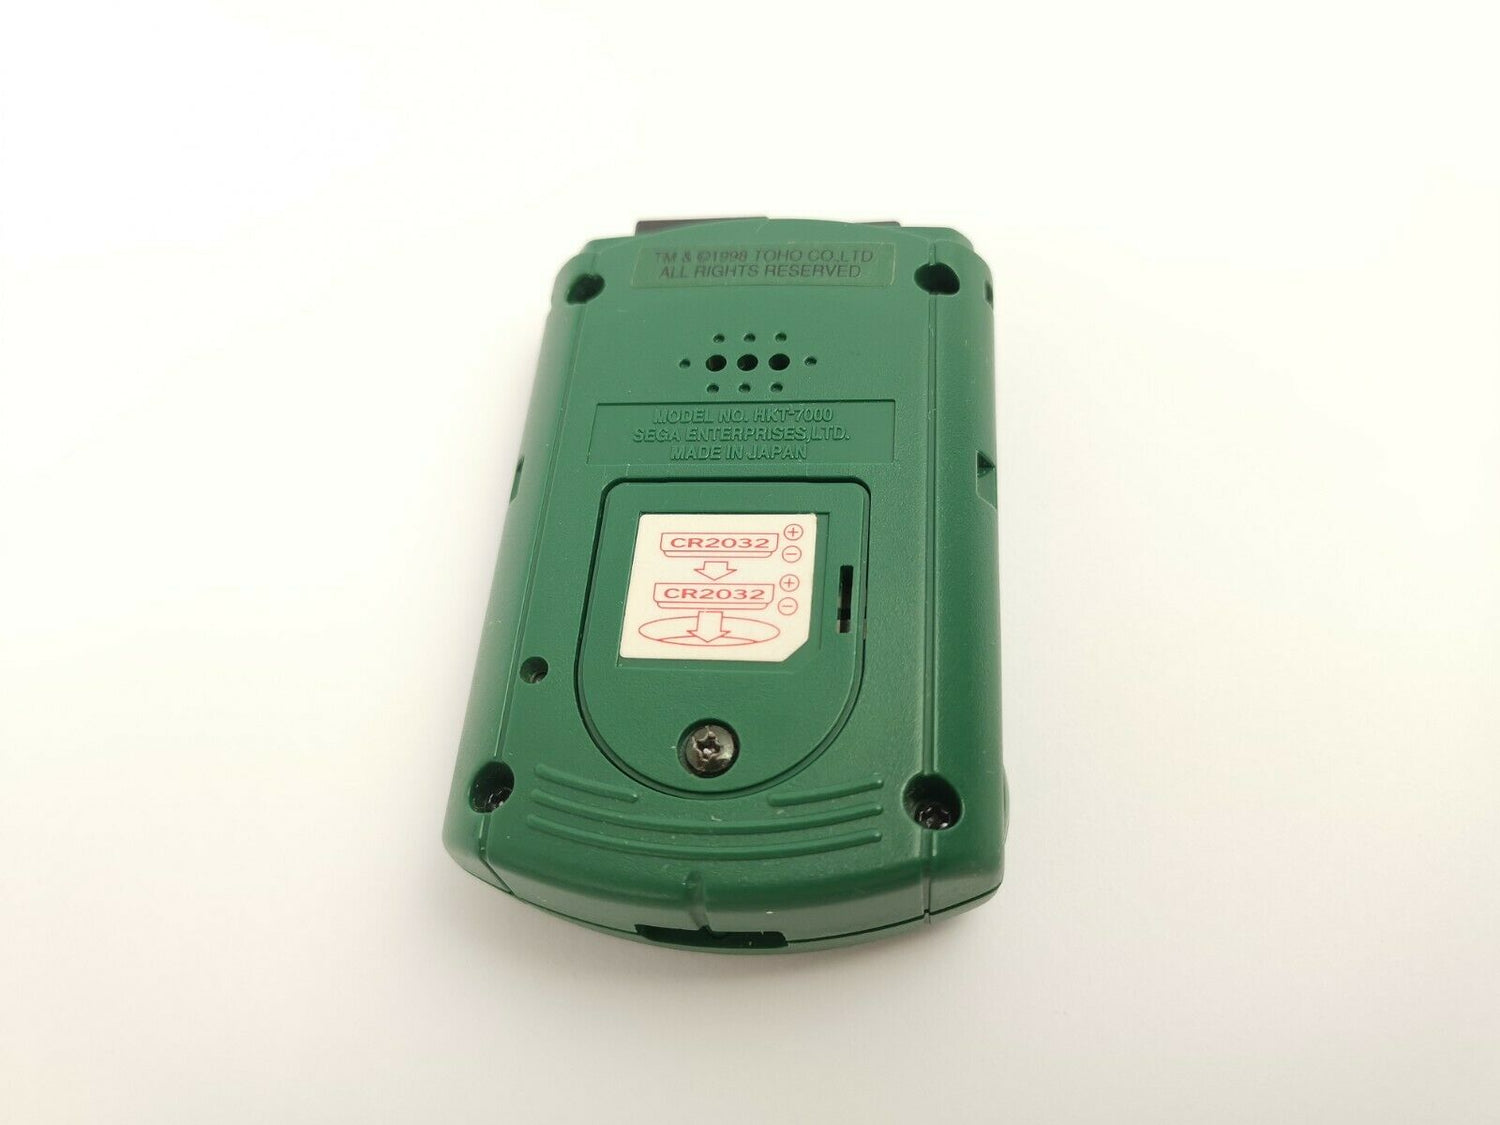 Sega Dreamcast Accessories 